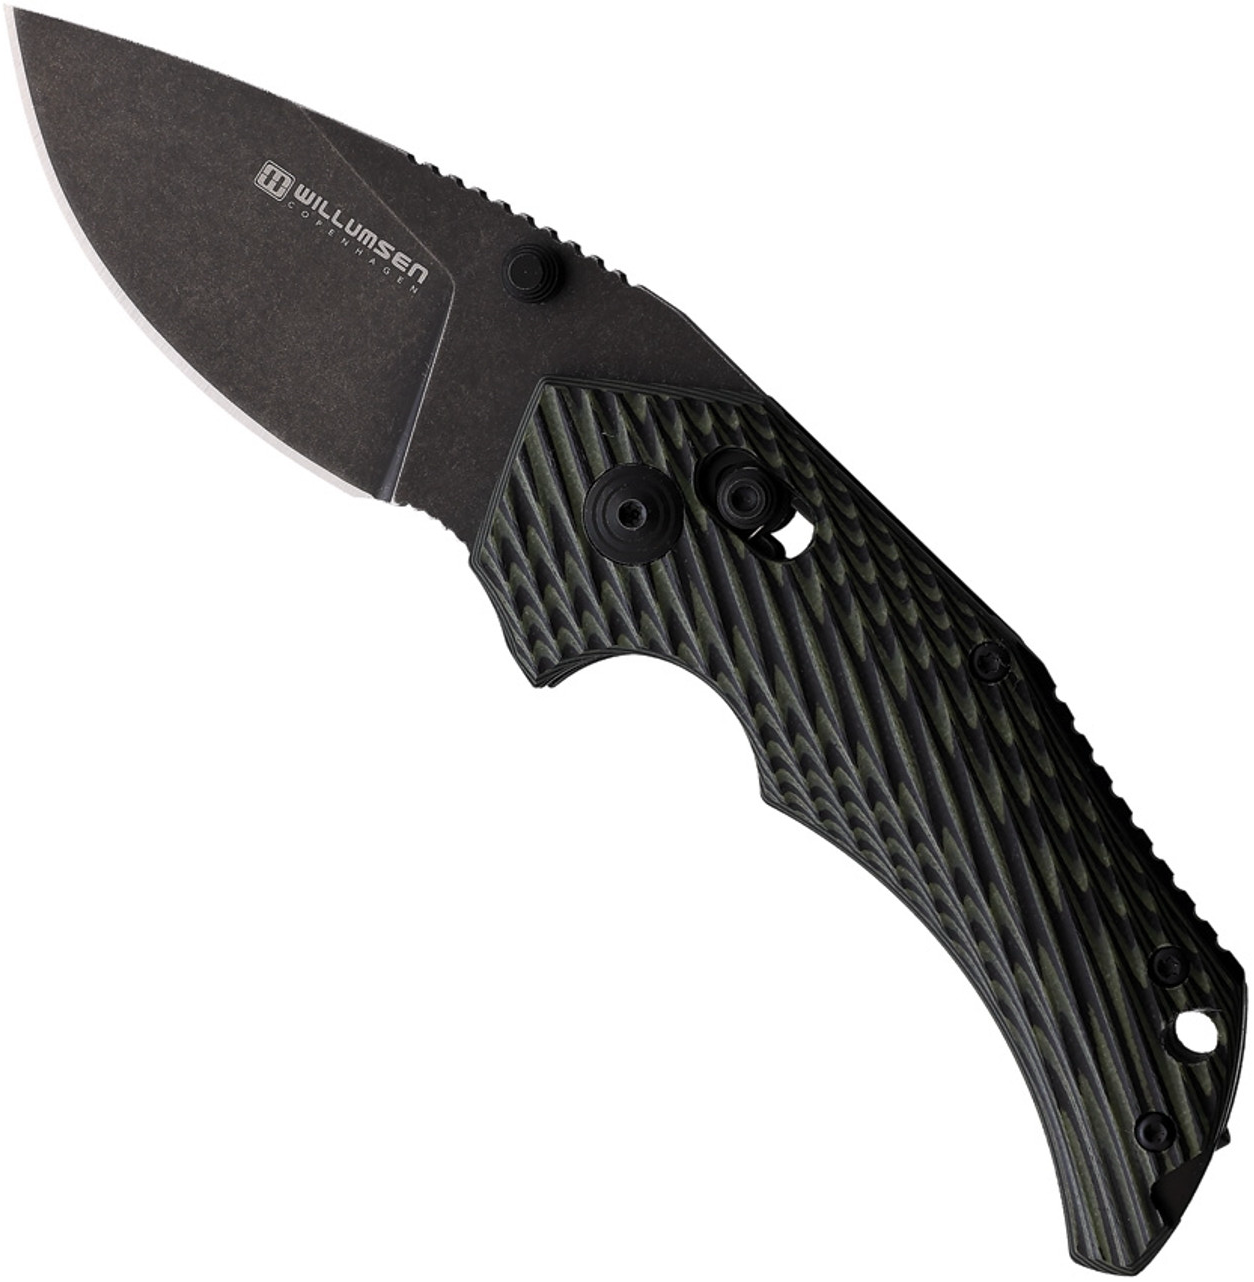 product image for Willumsen Copenhagen E Axis Folding Knife with Black Green G 10 Handle, 14C28N Plain Edge, Black Stonewash Finish